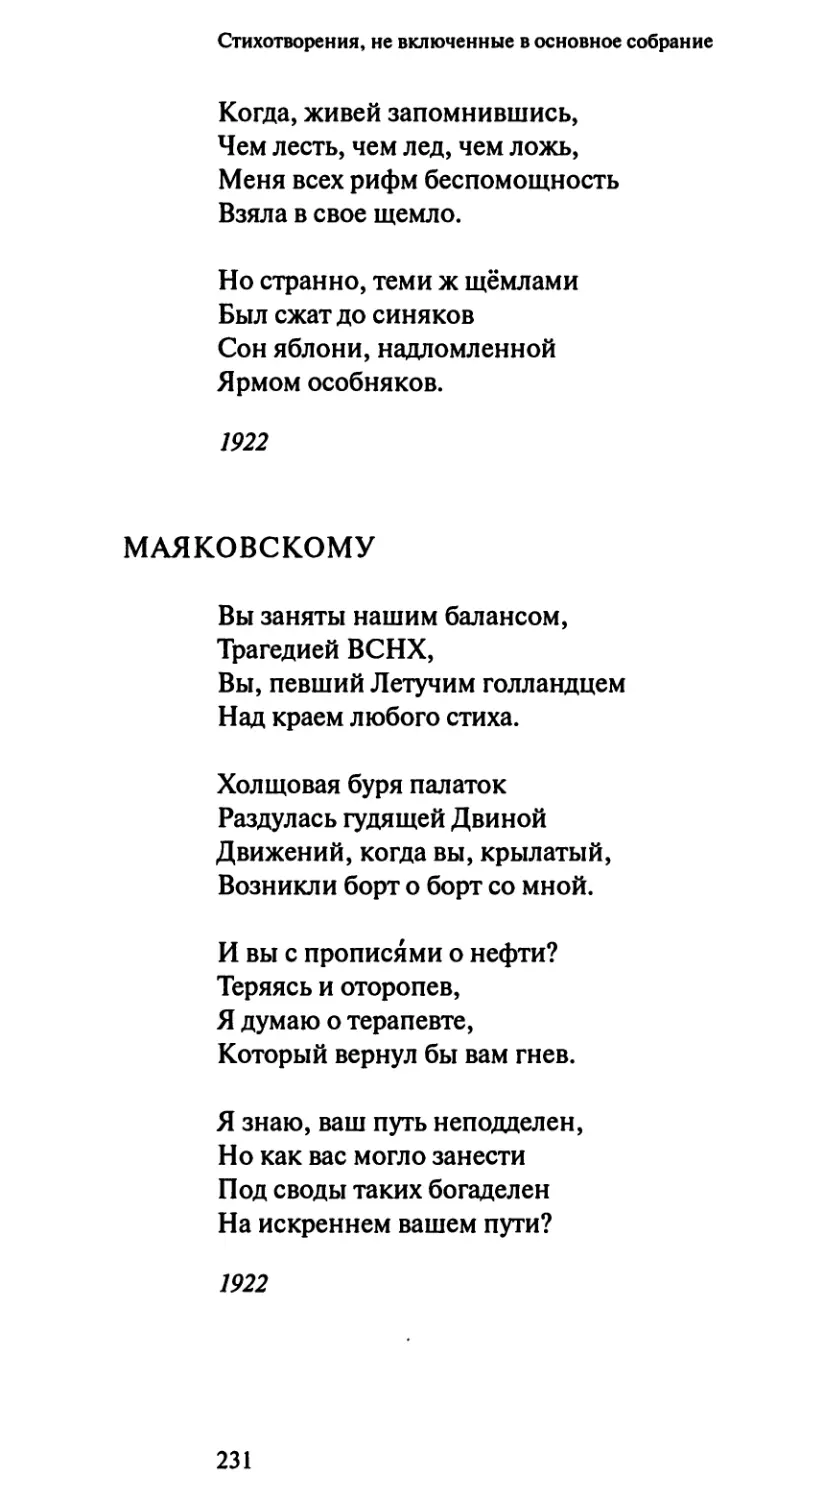 Маяковскому